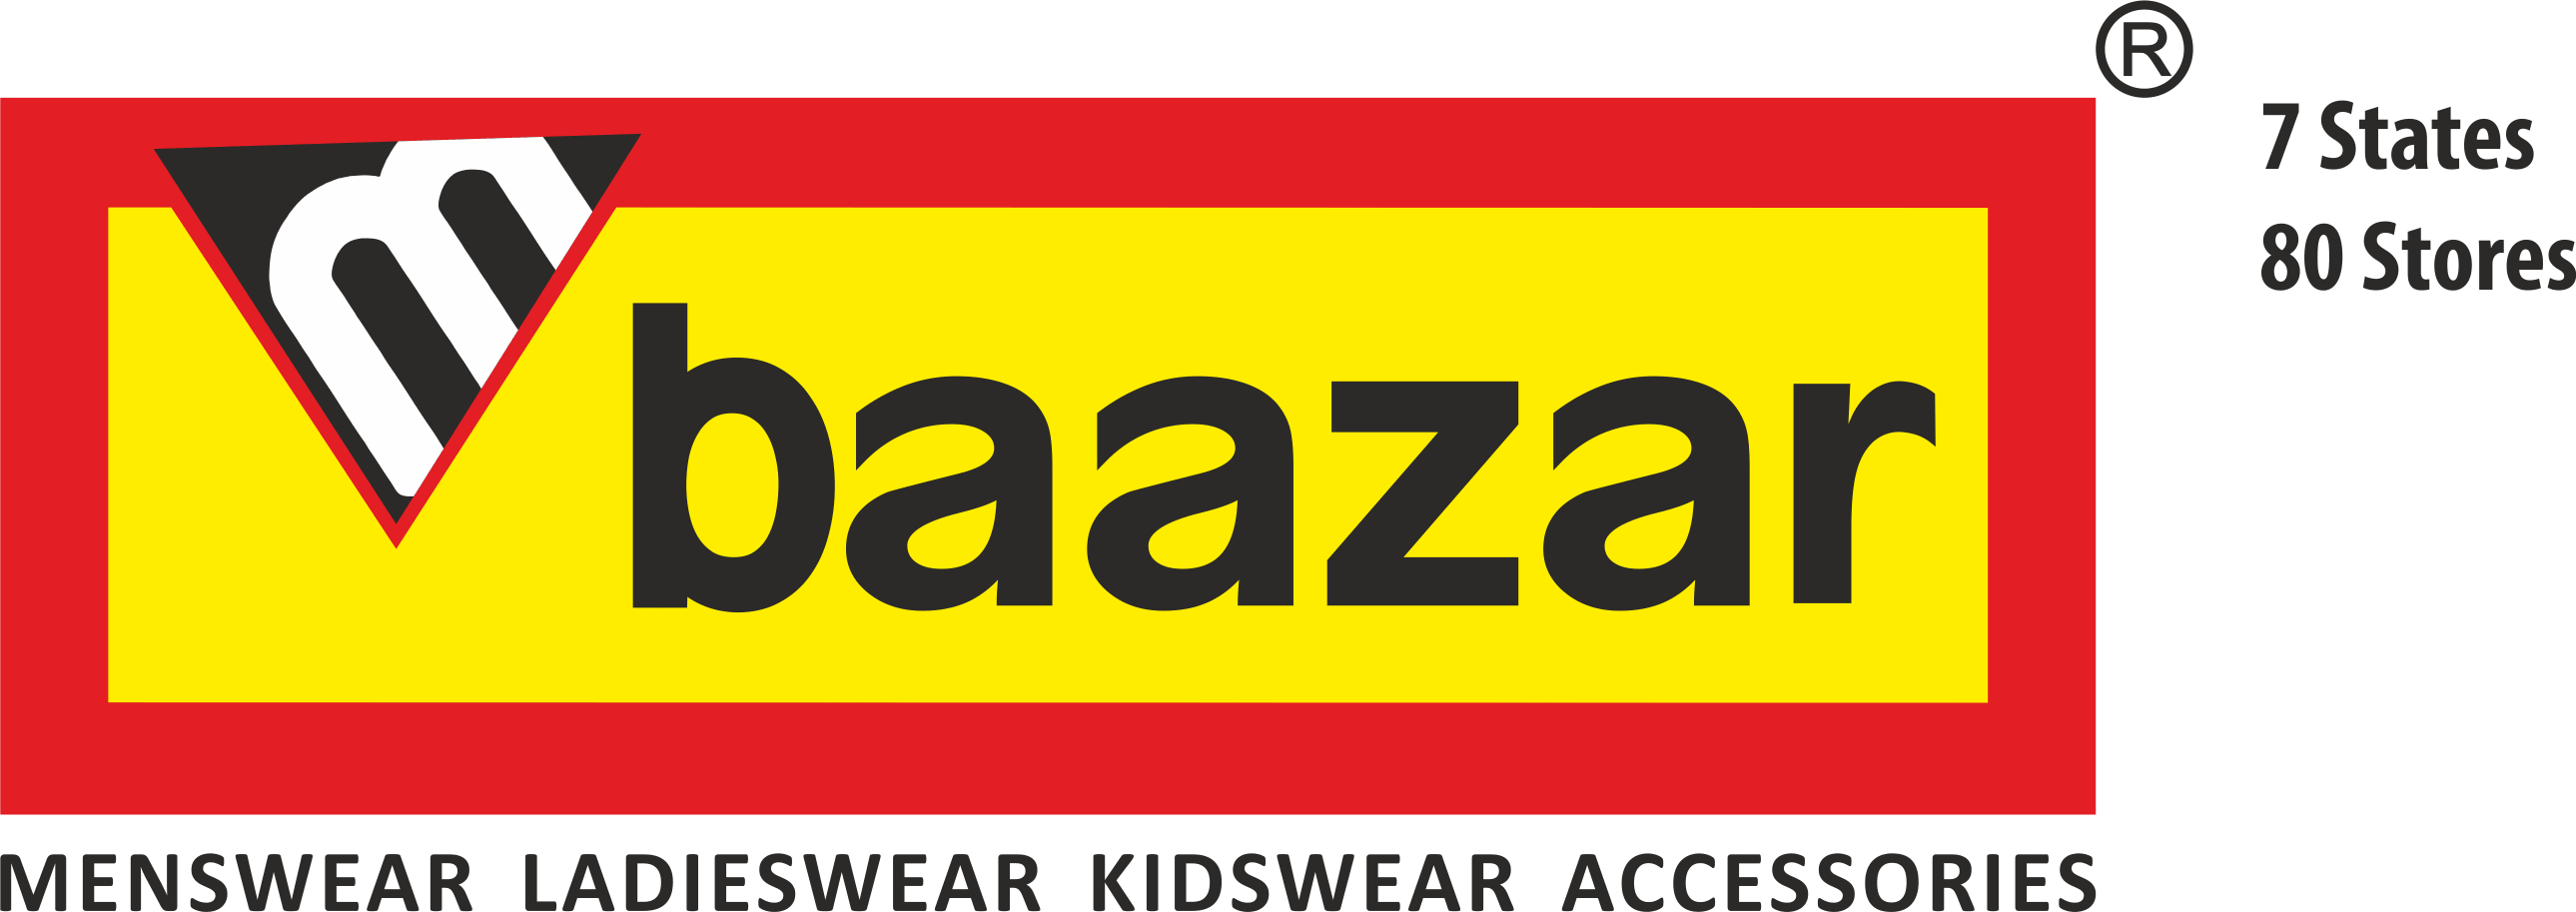 mBaazar-logo